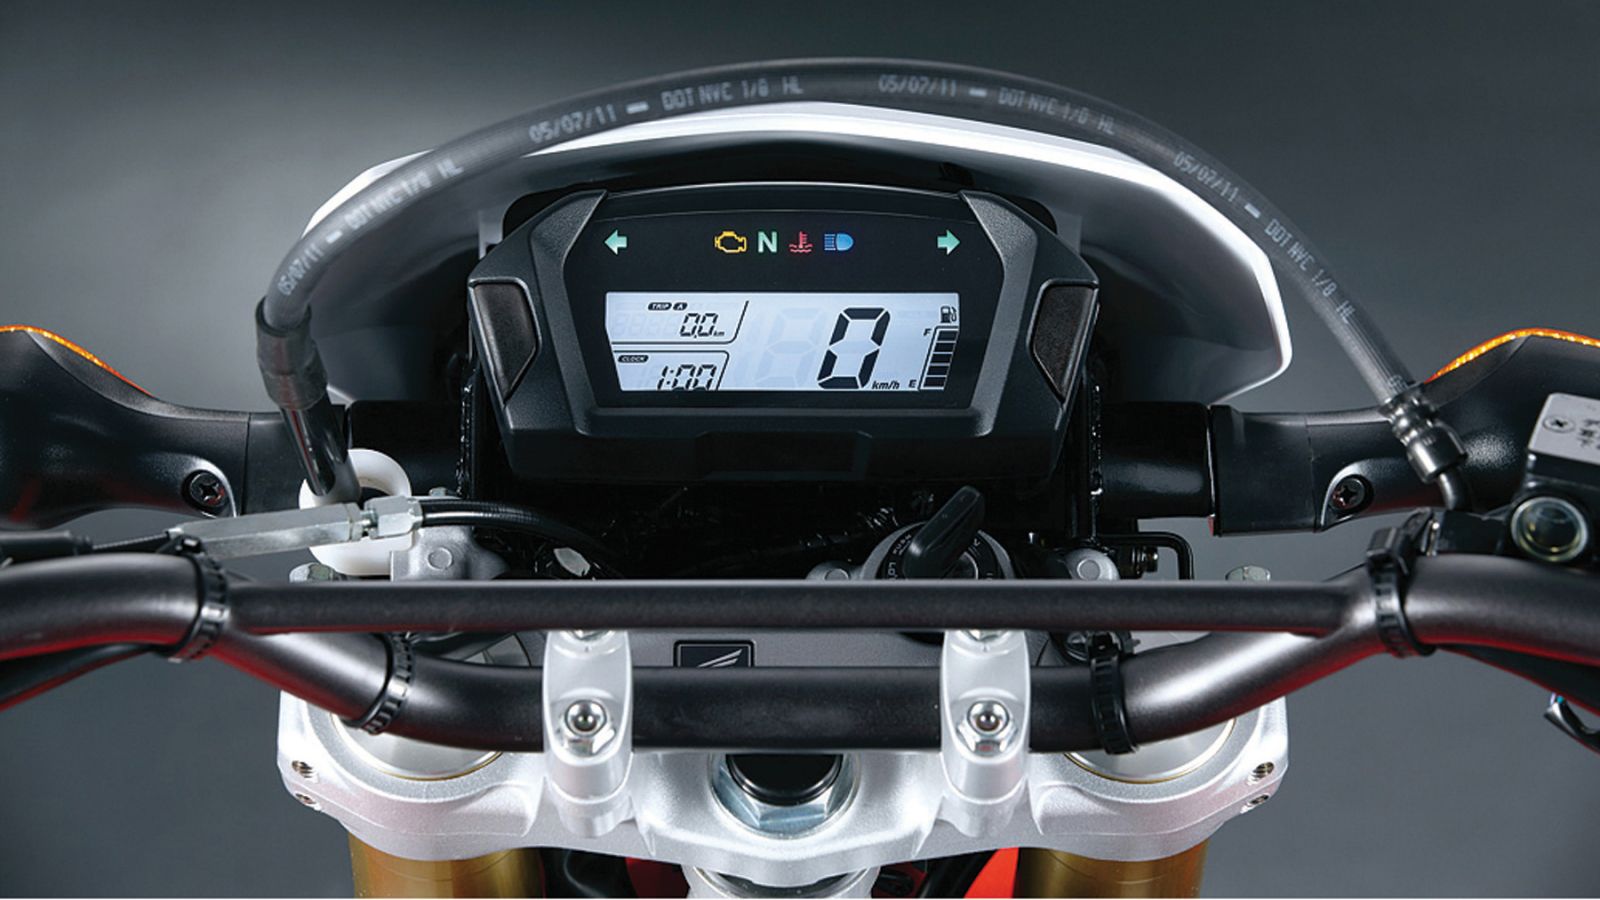 2015 - 2016 Honda CRF250L